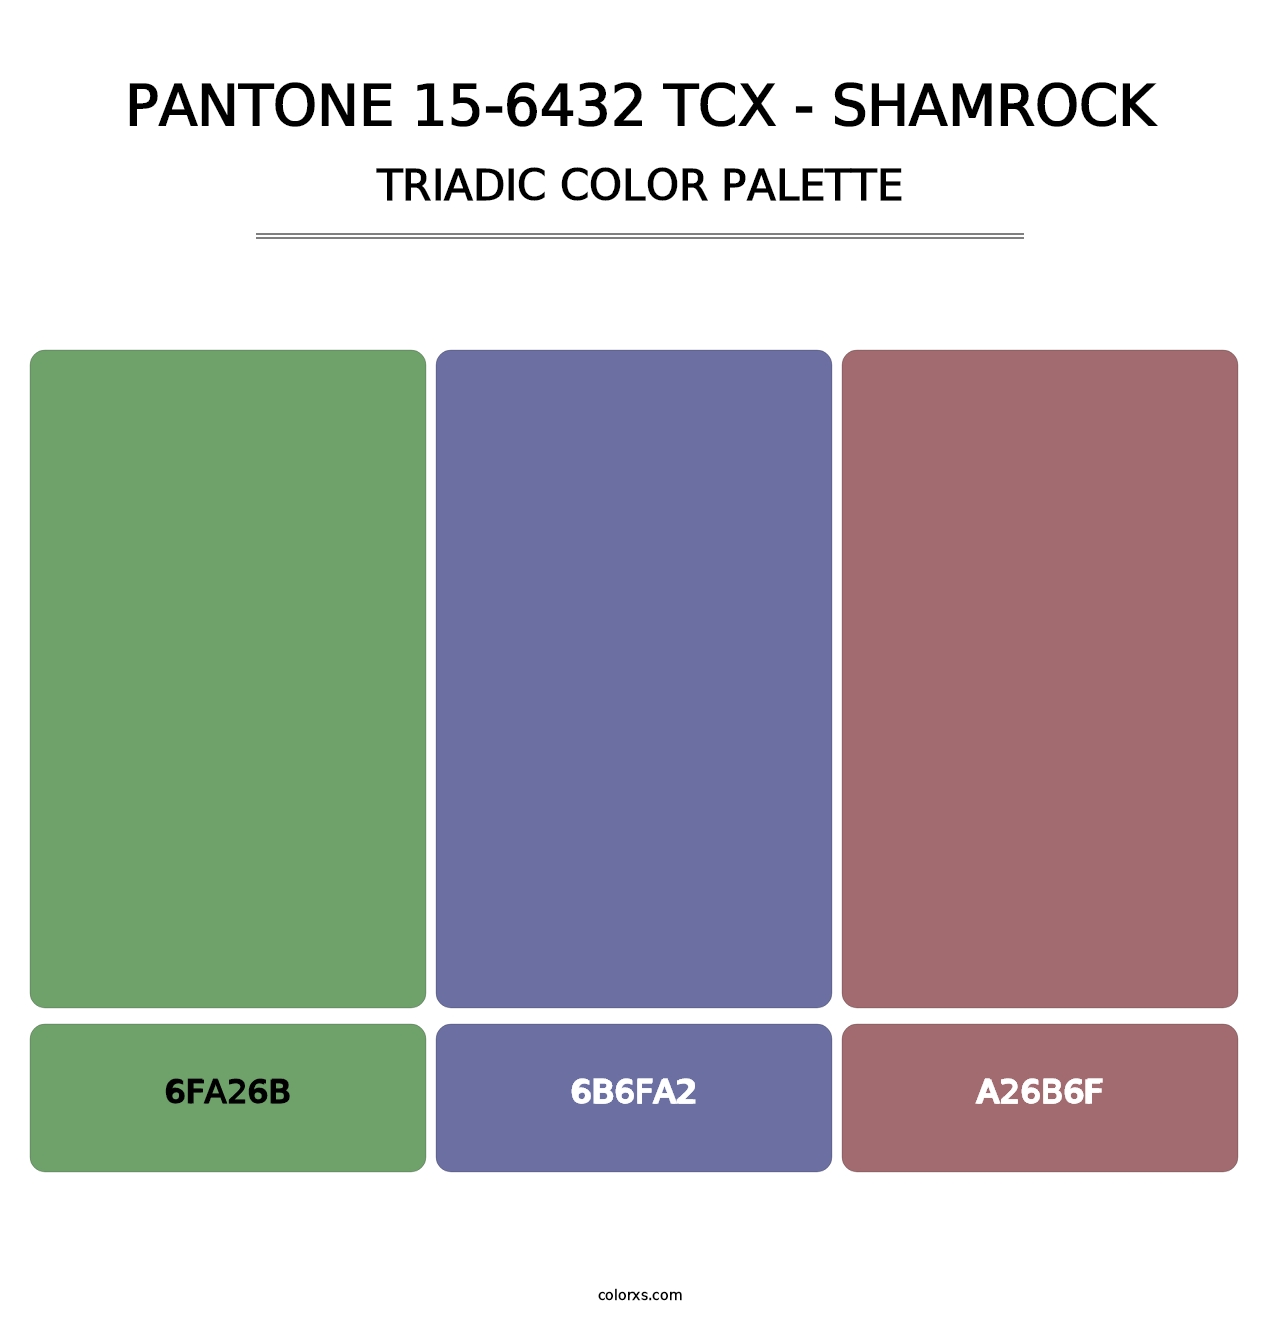 PANTONE 15-6432 TCX - Shamrock - Triadic Color Palette